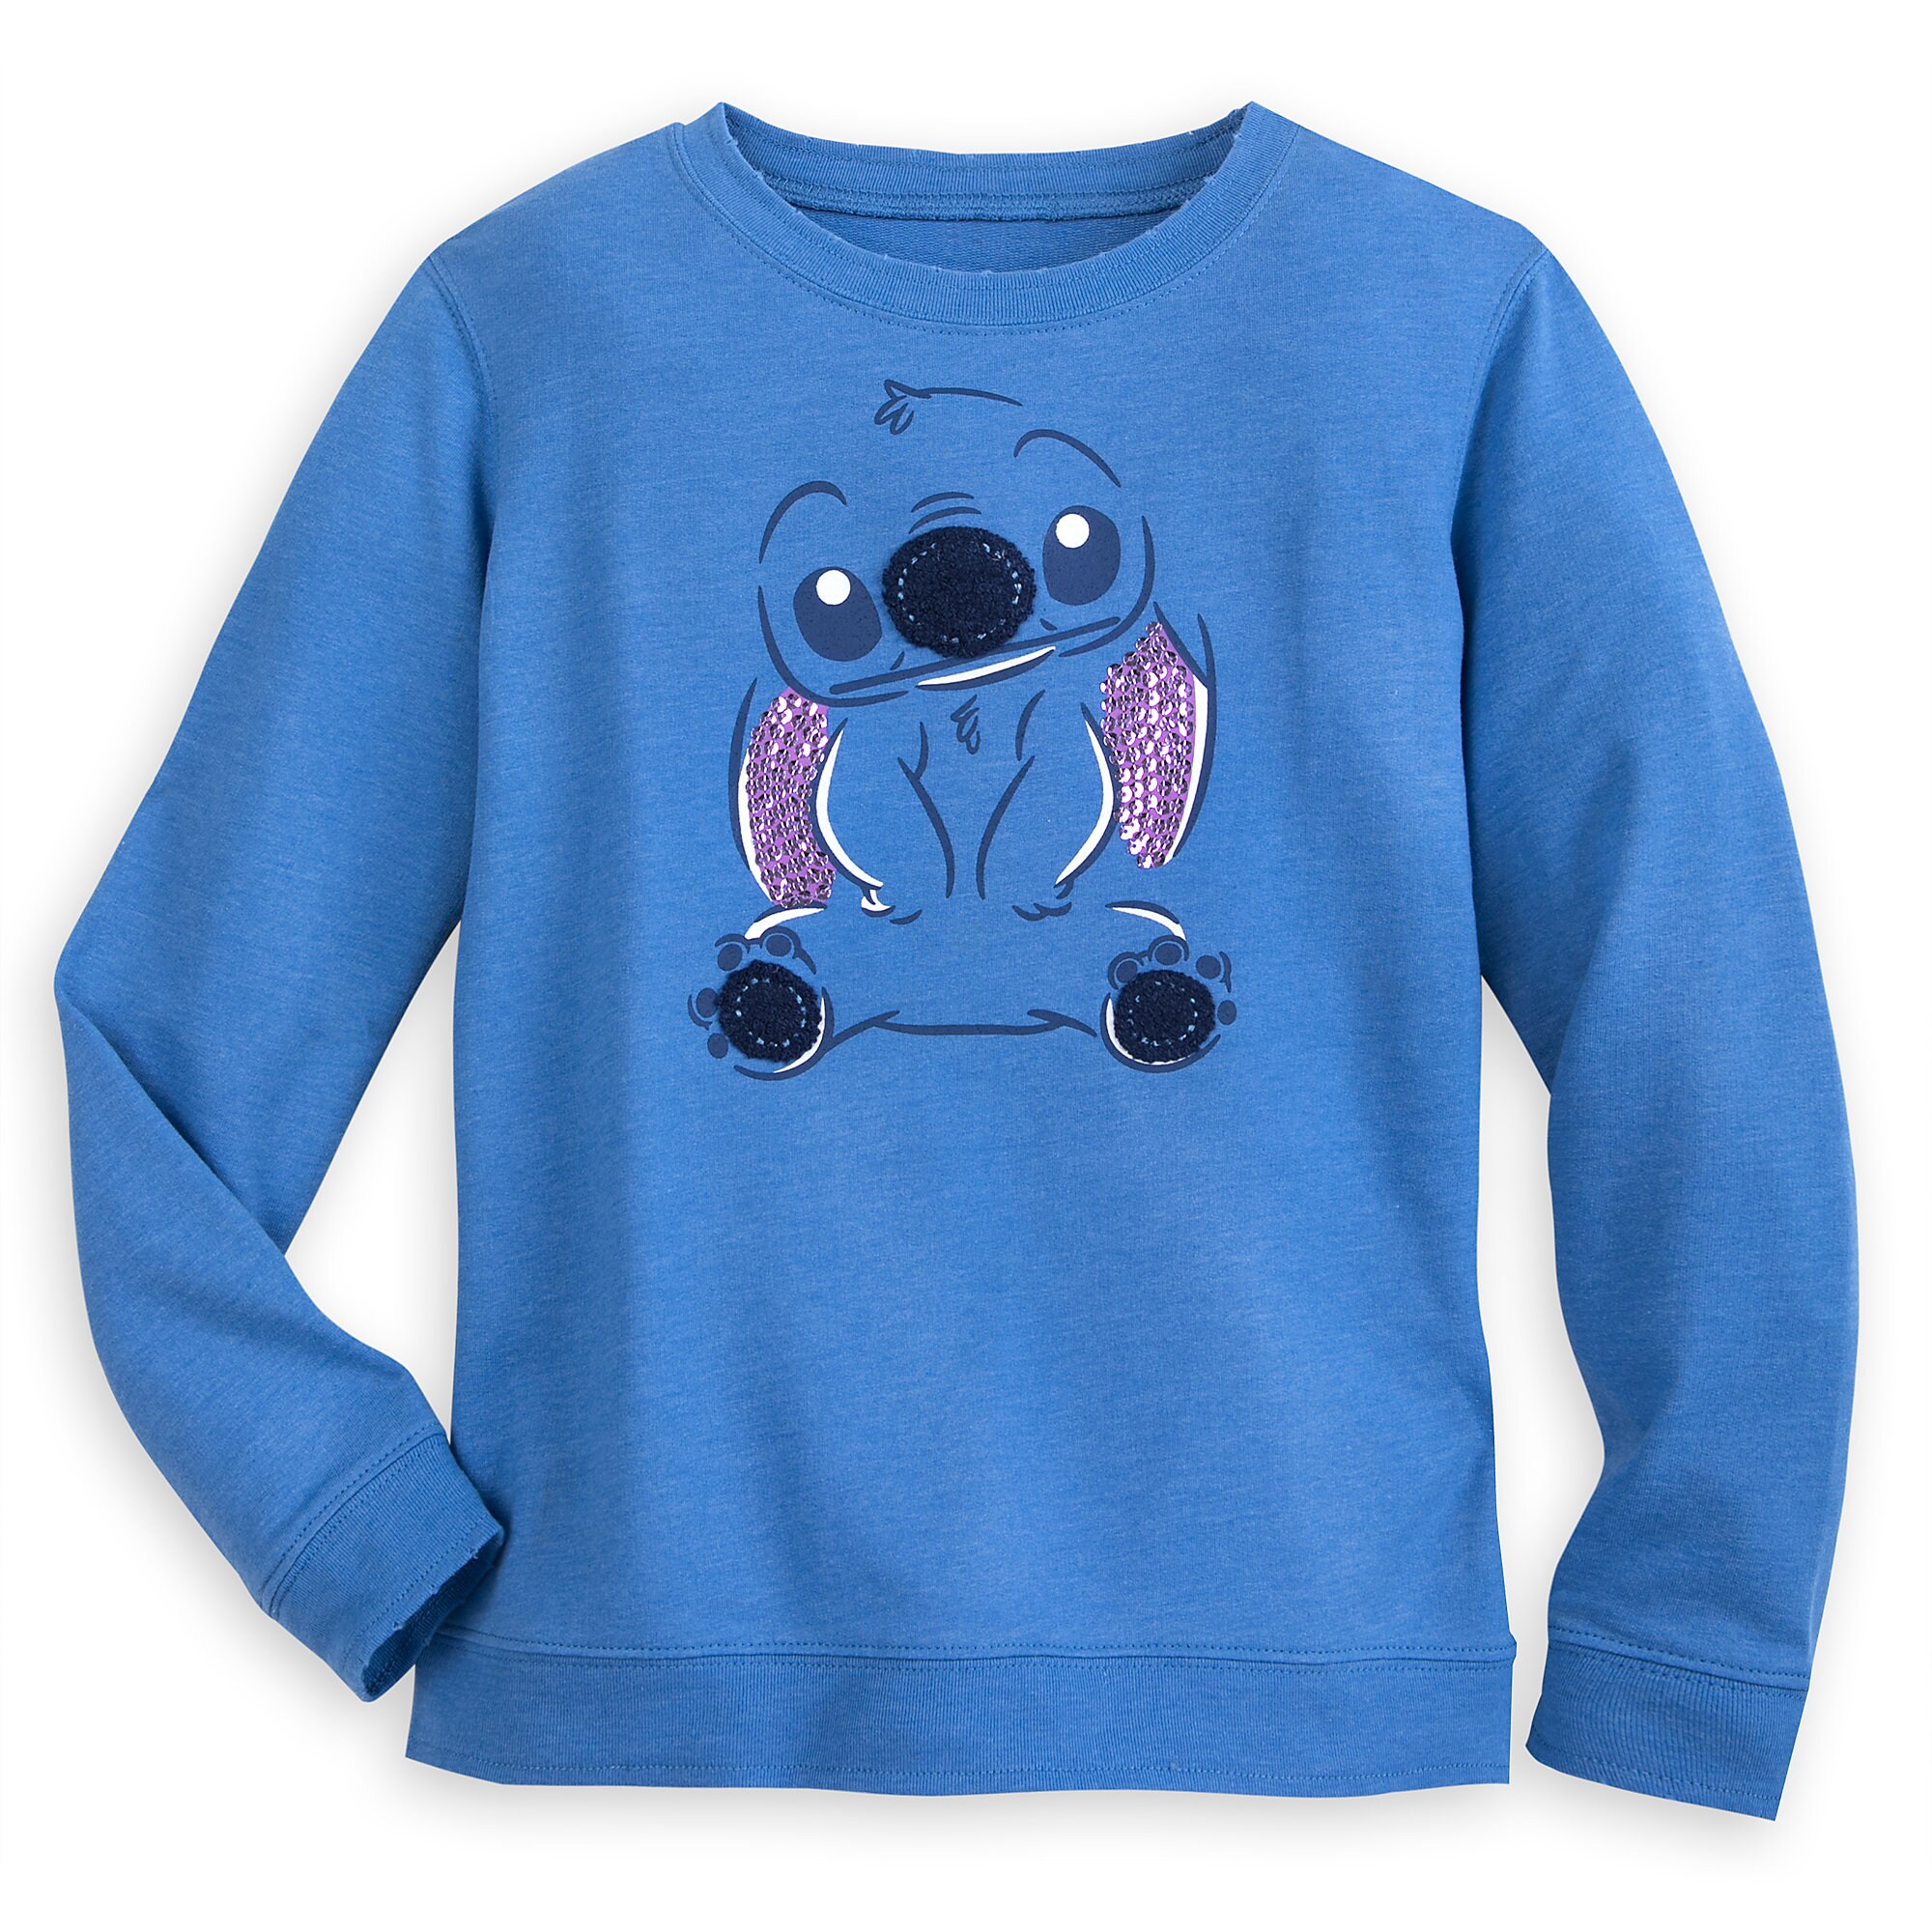 Stitch Long Sleeve Sweatshirt for Girls